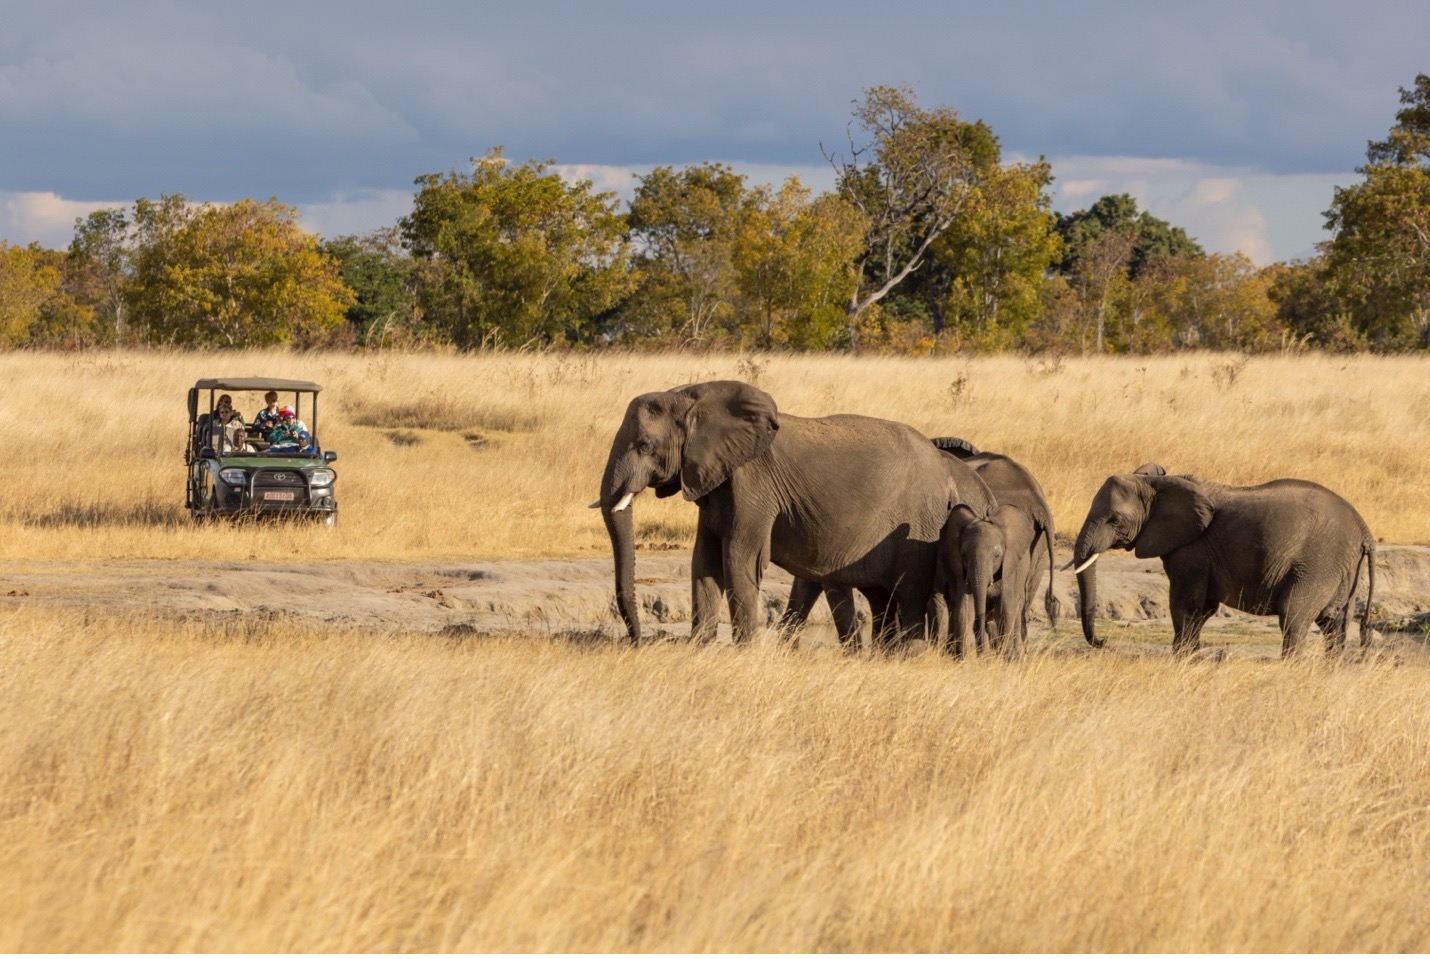 a herd of elephants across a grassy plain with a safari vehicle